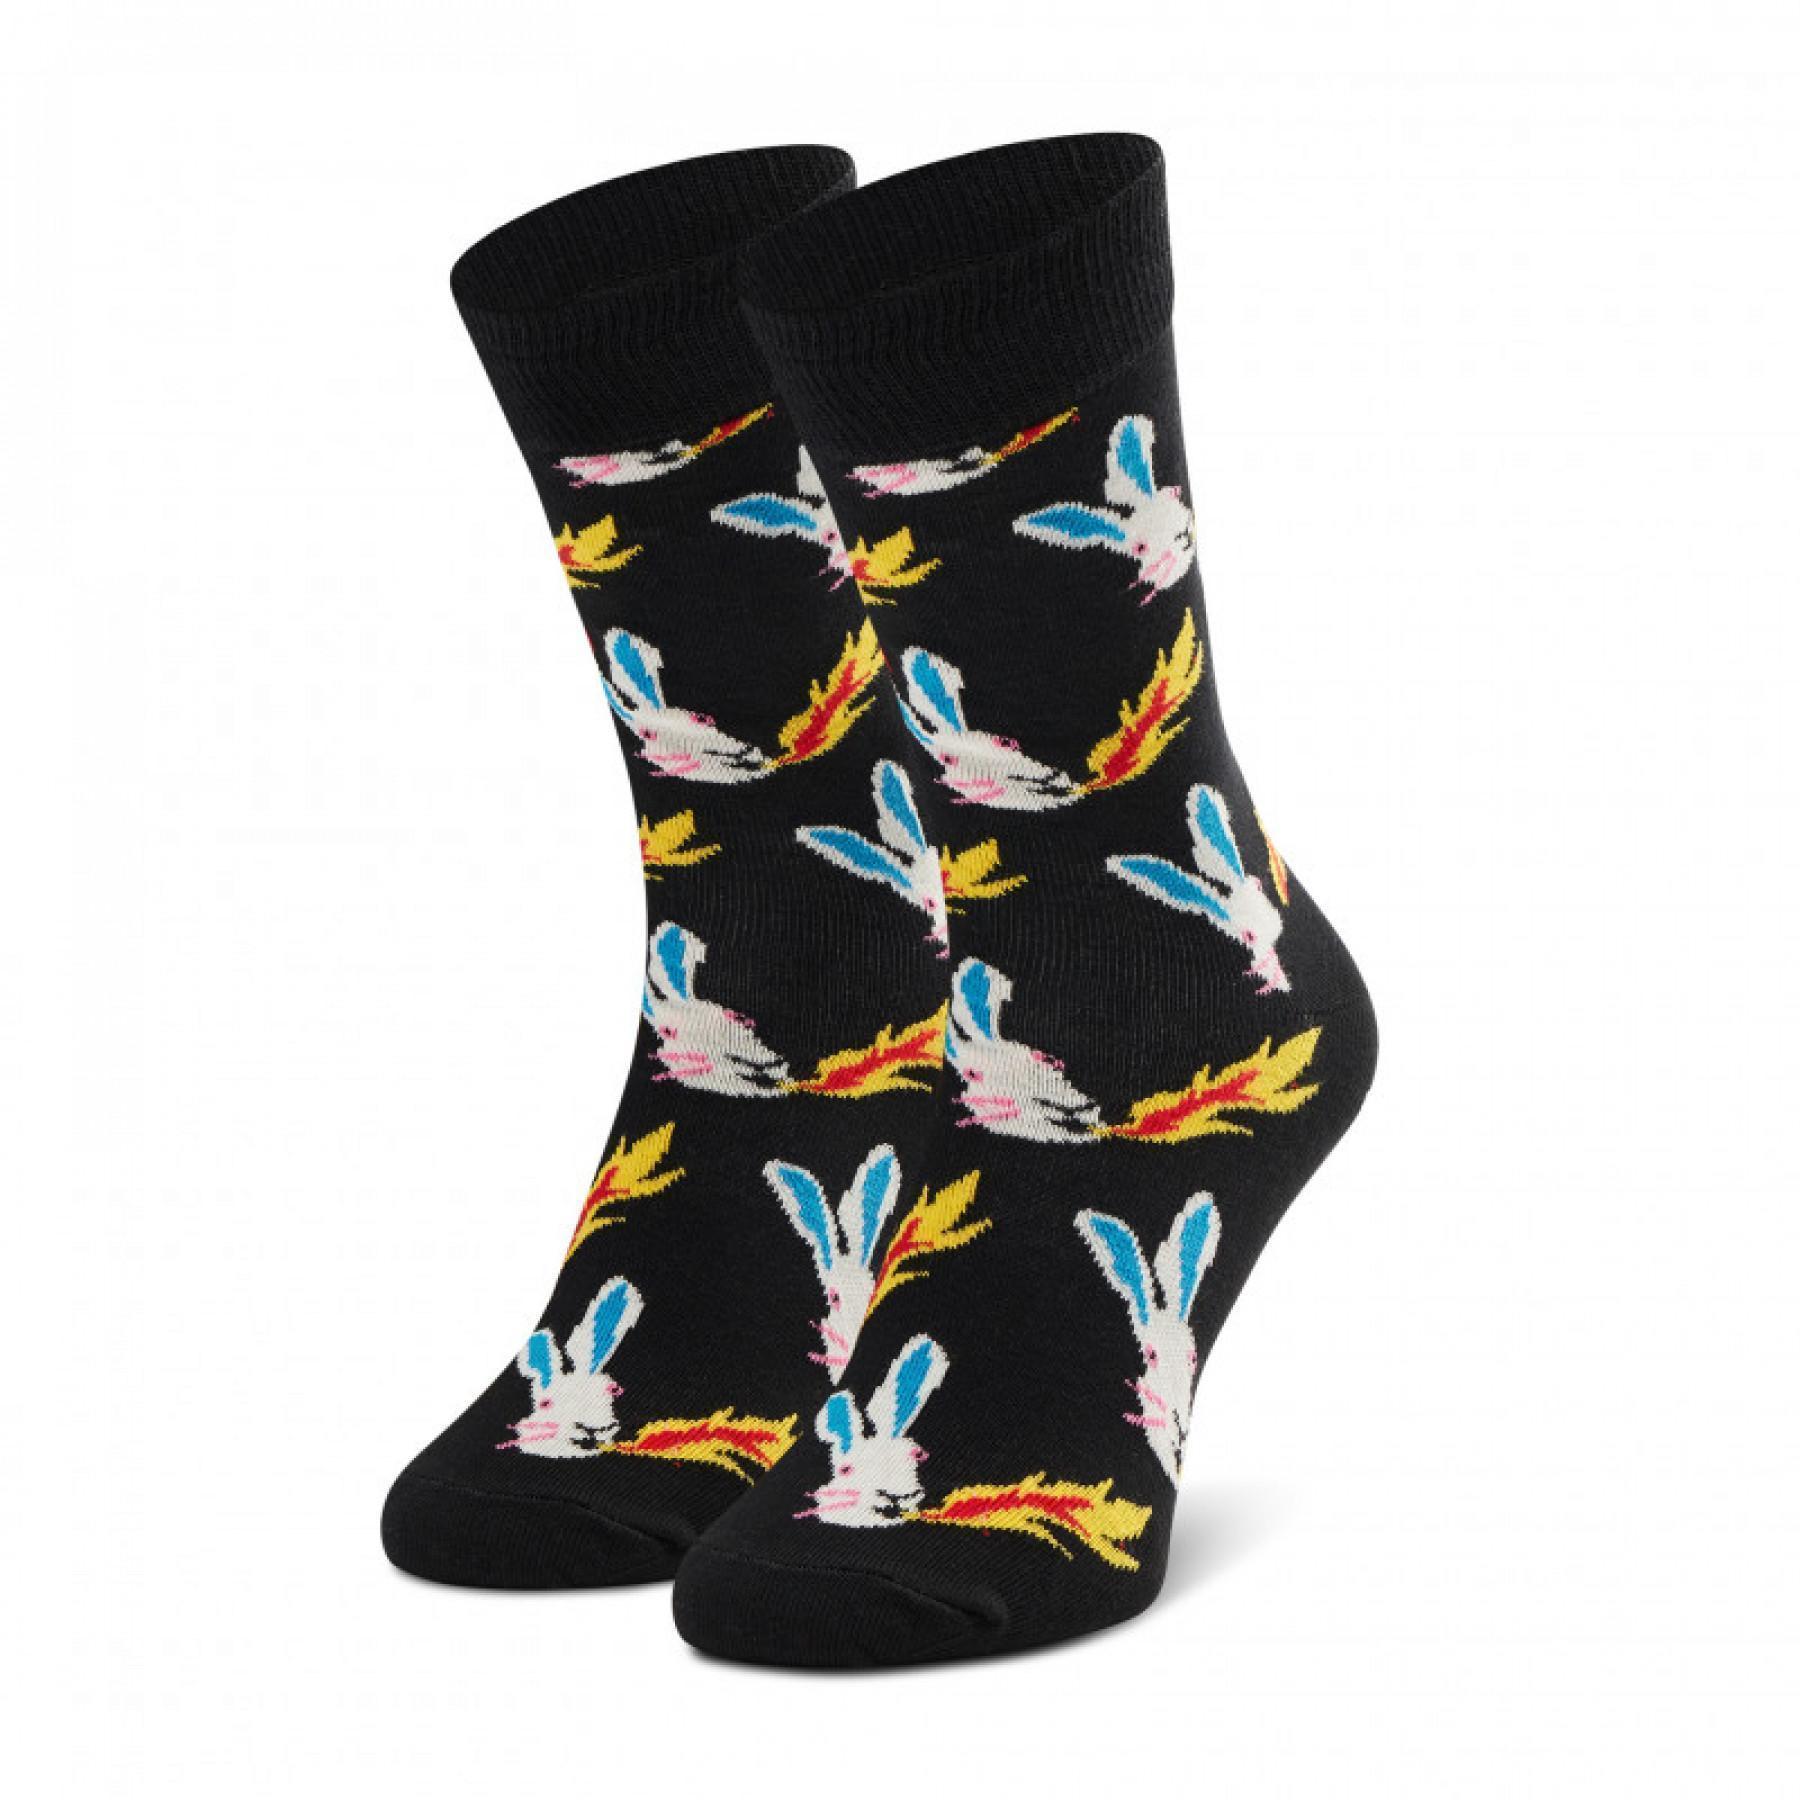 Chaussettes hautes Happy Socks fire rabbit